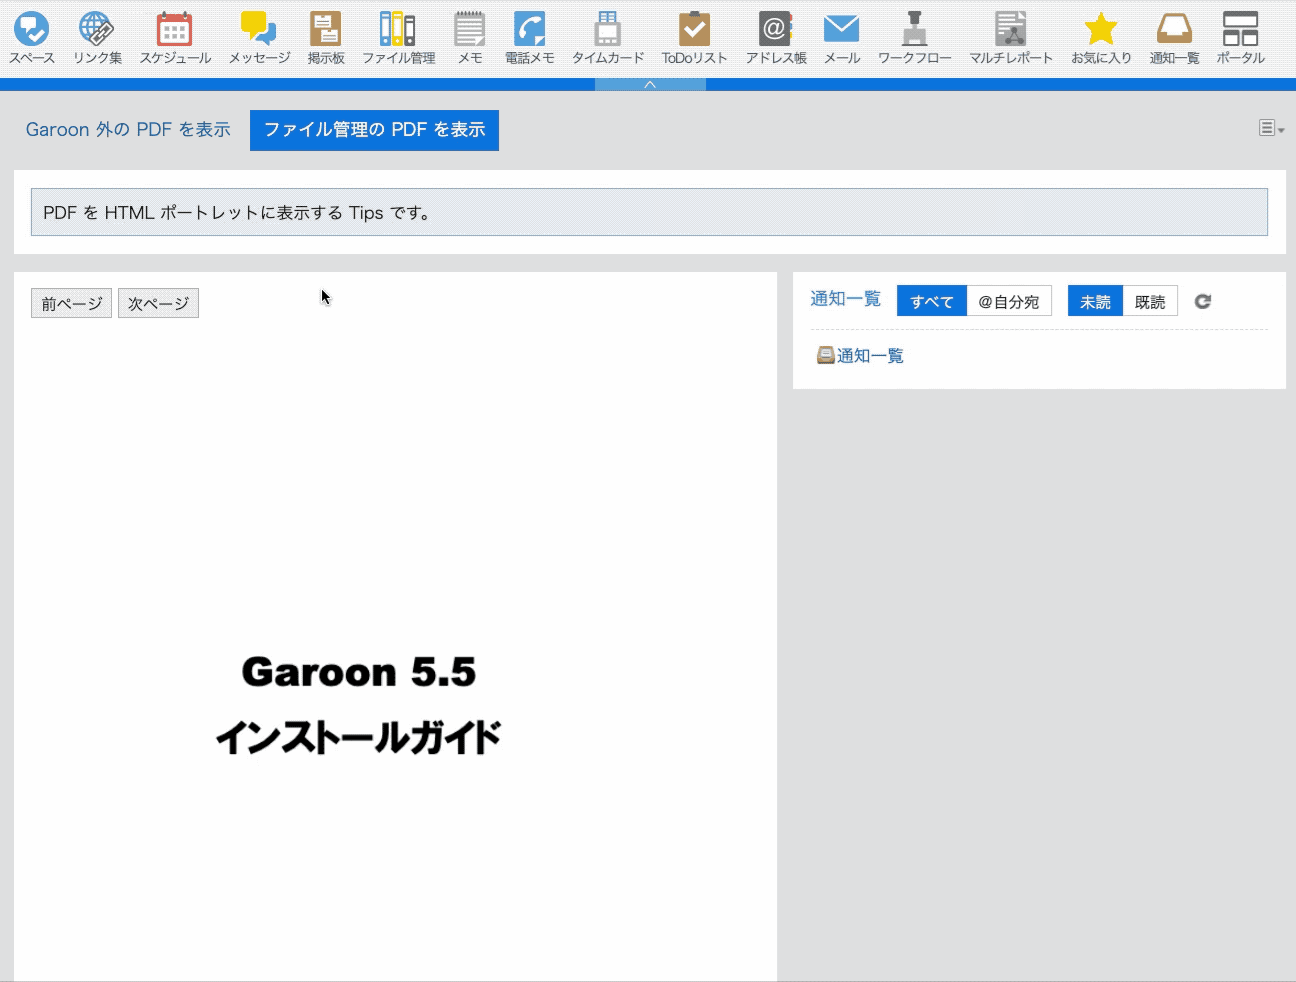 Garoon のファイル管理内に保存した PDF ファイルを表示しているGIF